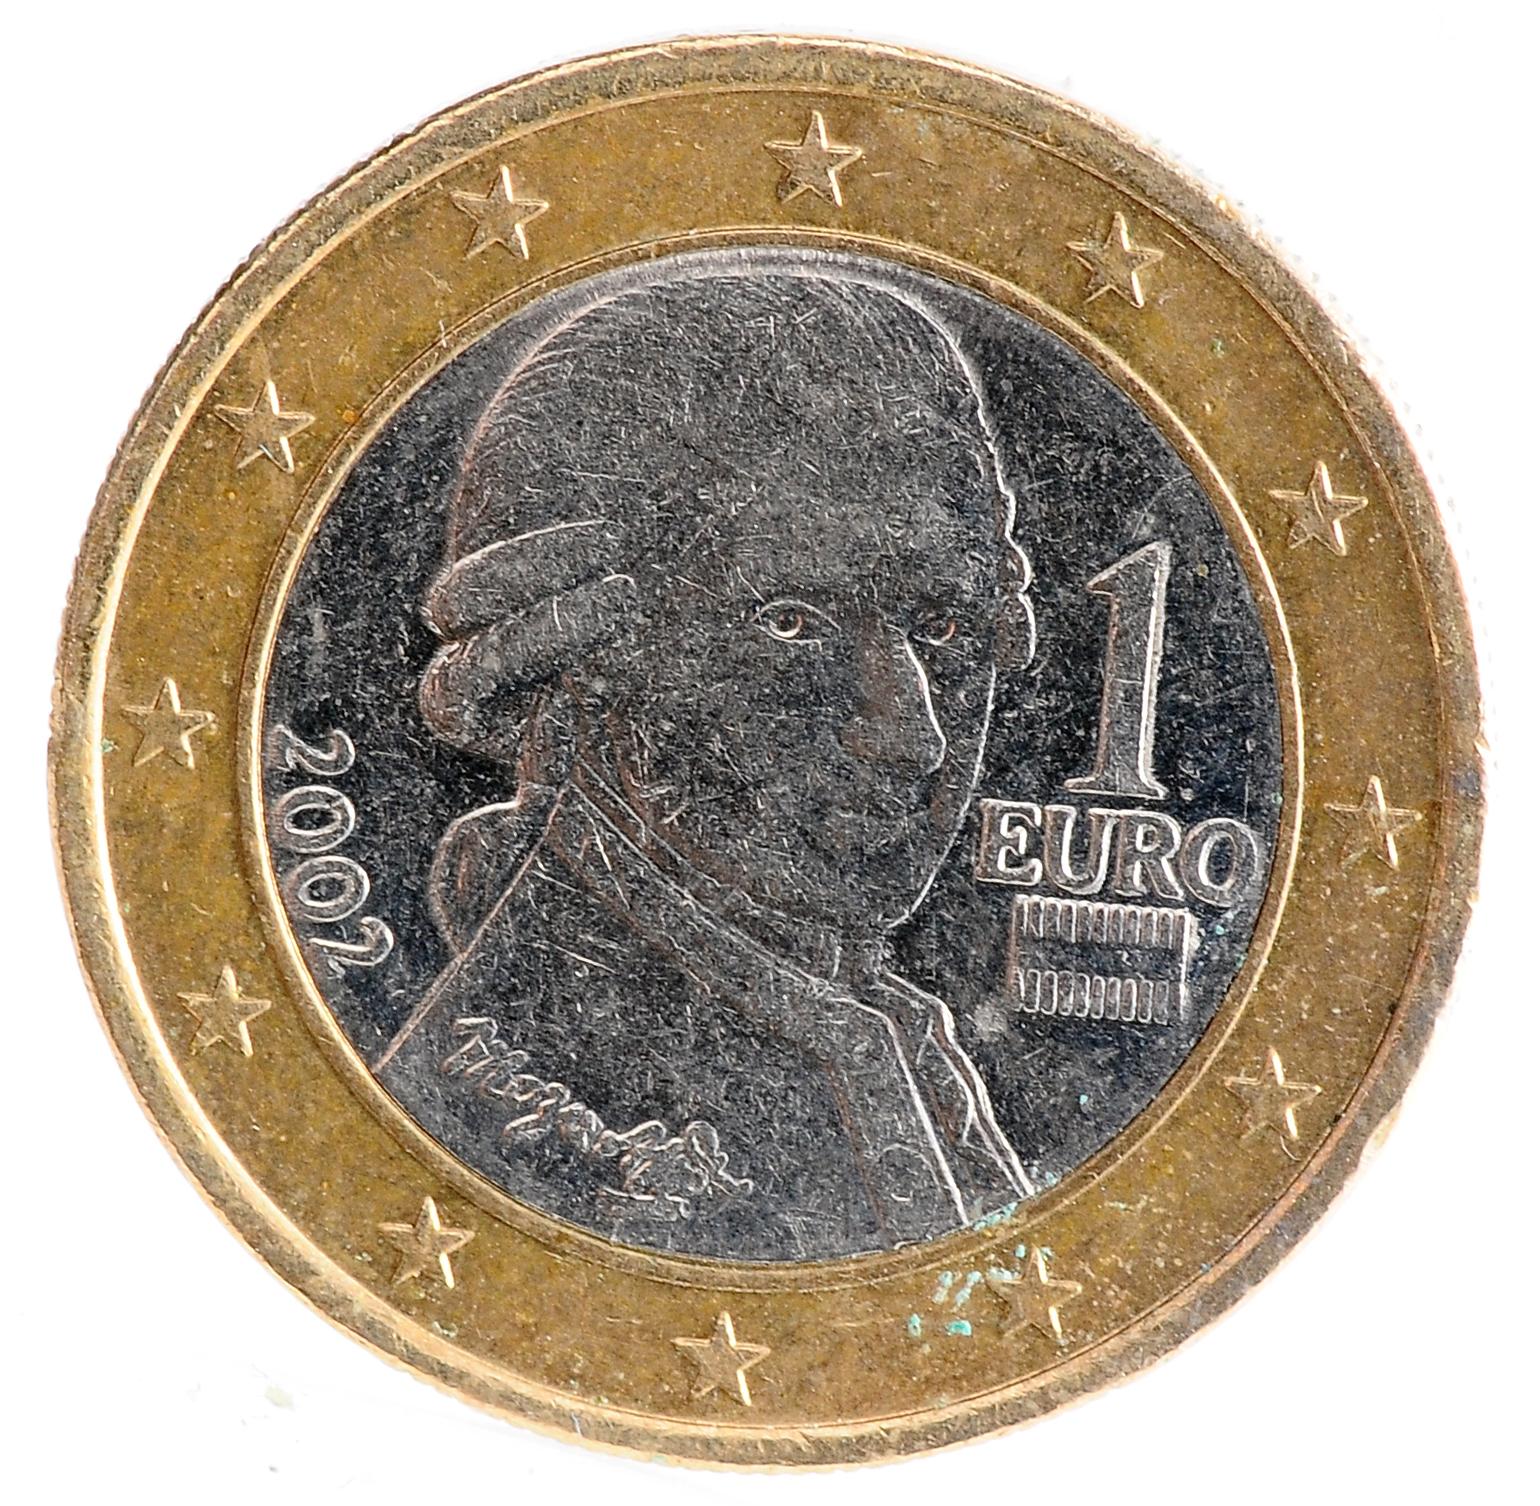 2 рубля 1 евро. 1 Евро 2002. 1 Евро 2002 Austria. Монета 1 евро 2002. Монетка 1 евро 2002 года.